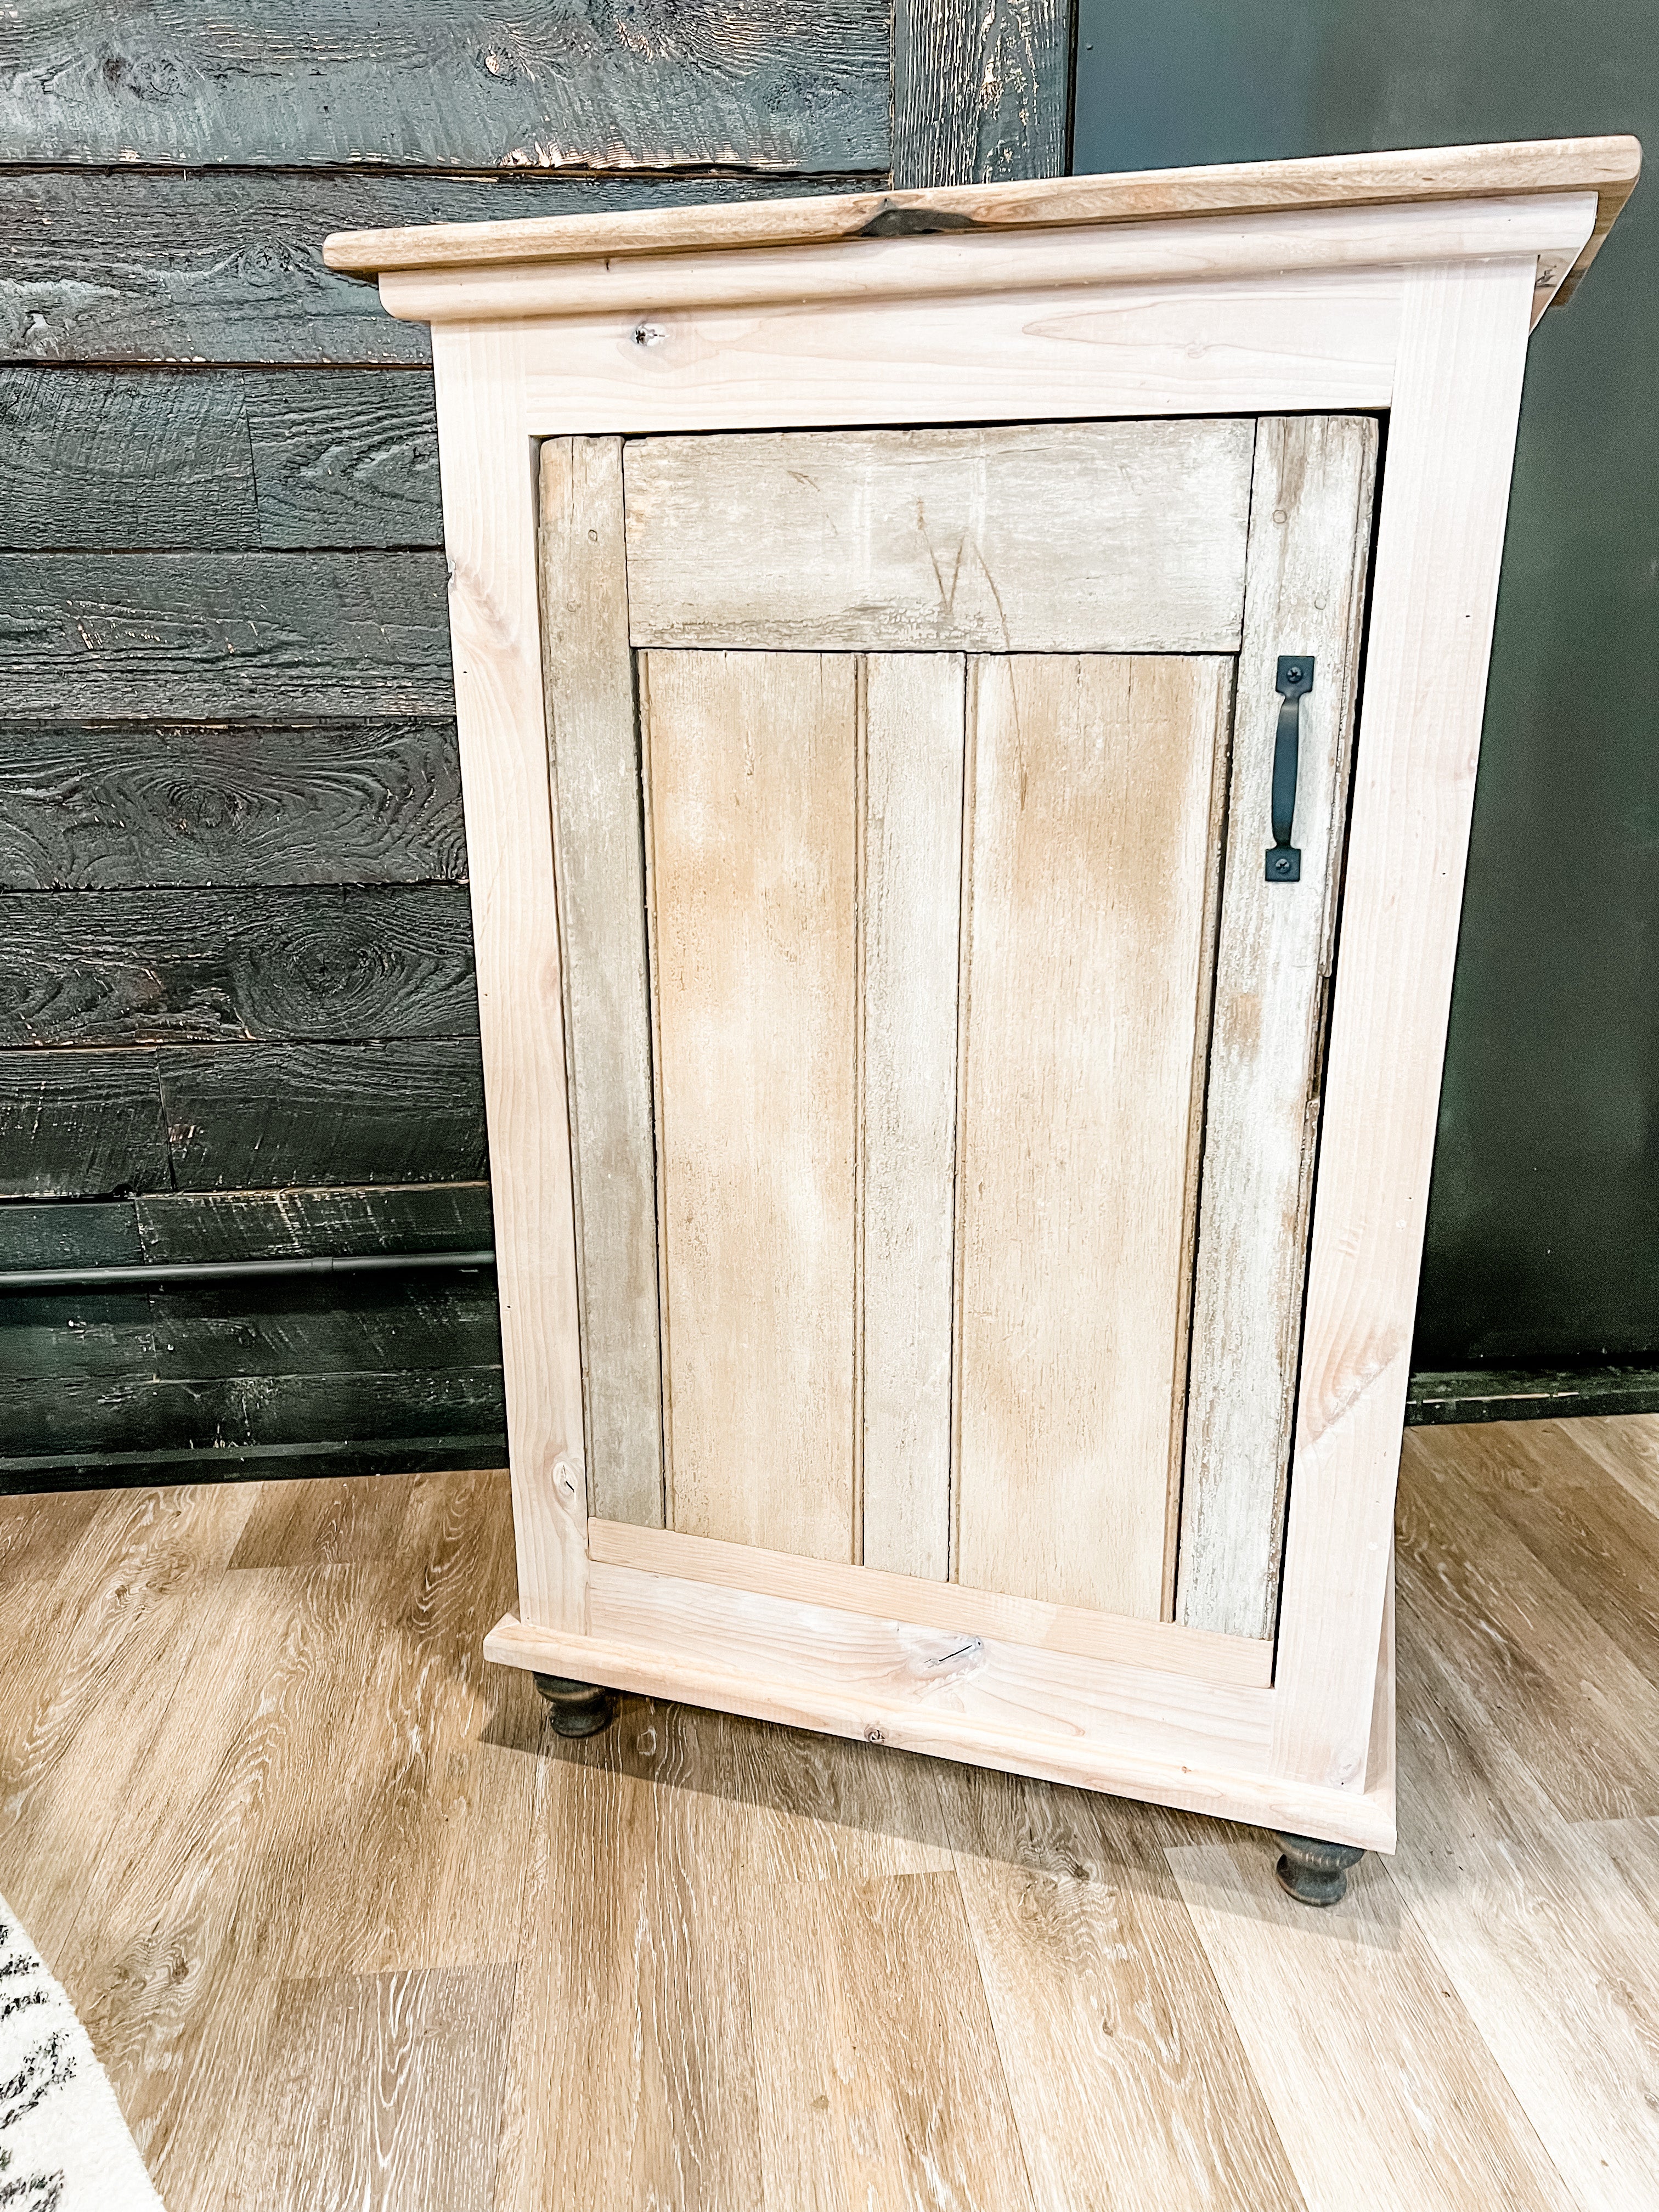 Hand-Made Cabinet With Reclaimed Door